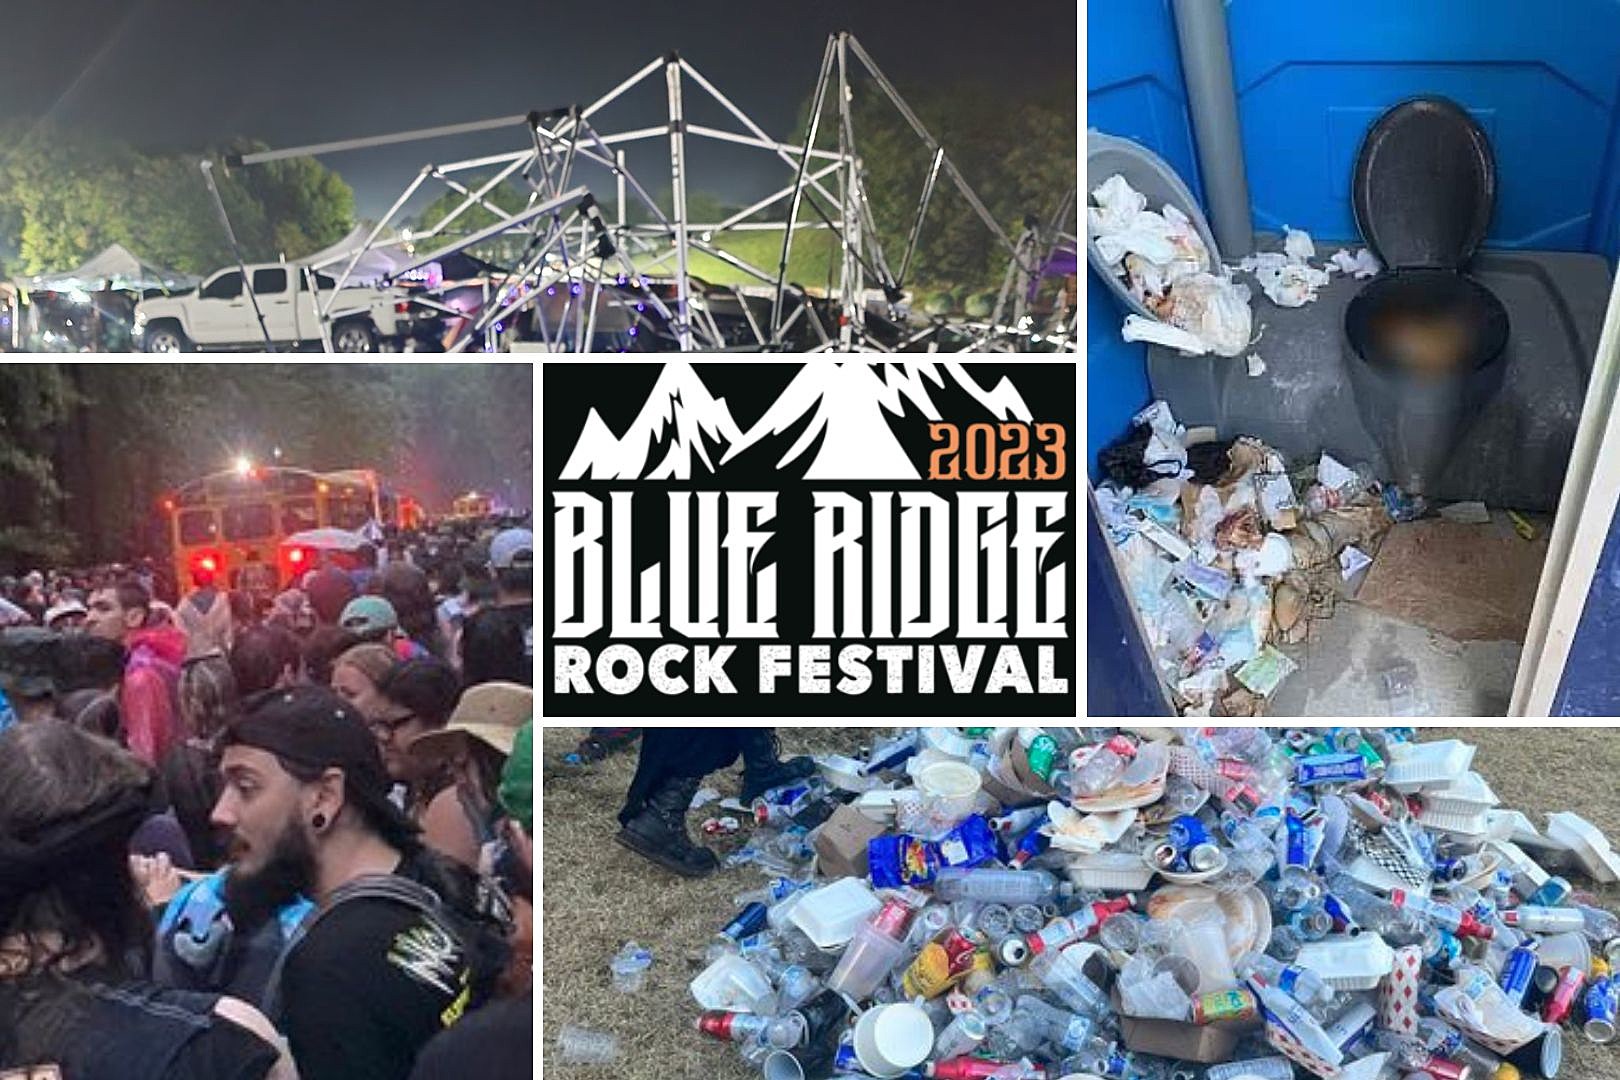 Photos Video Fans Document Disastrous Blue Ridge Rock Festival WorldNewsEra